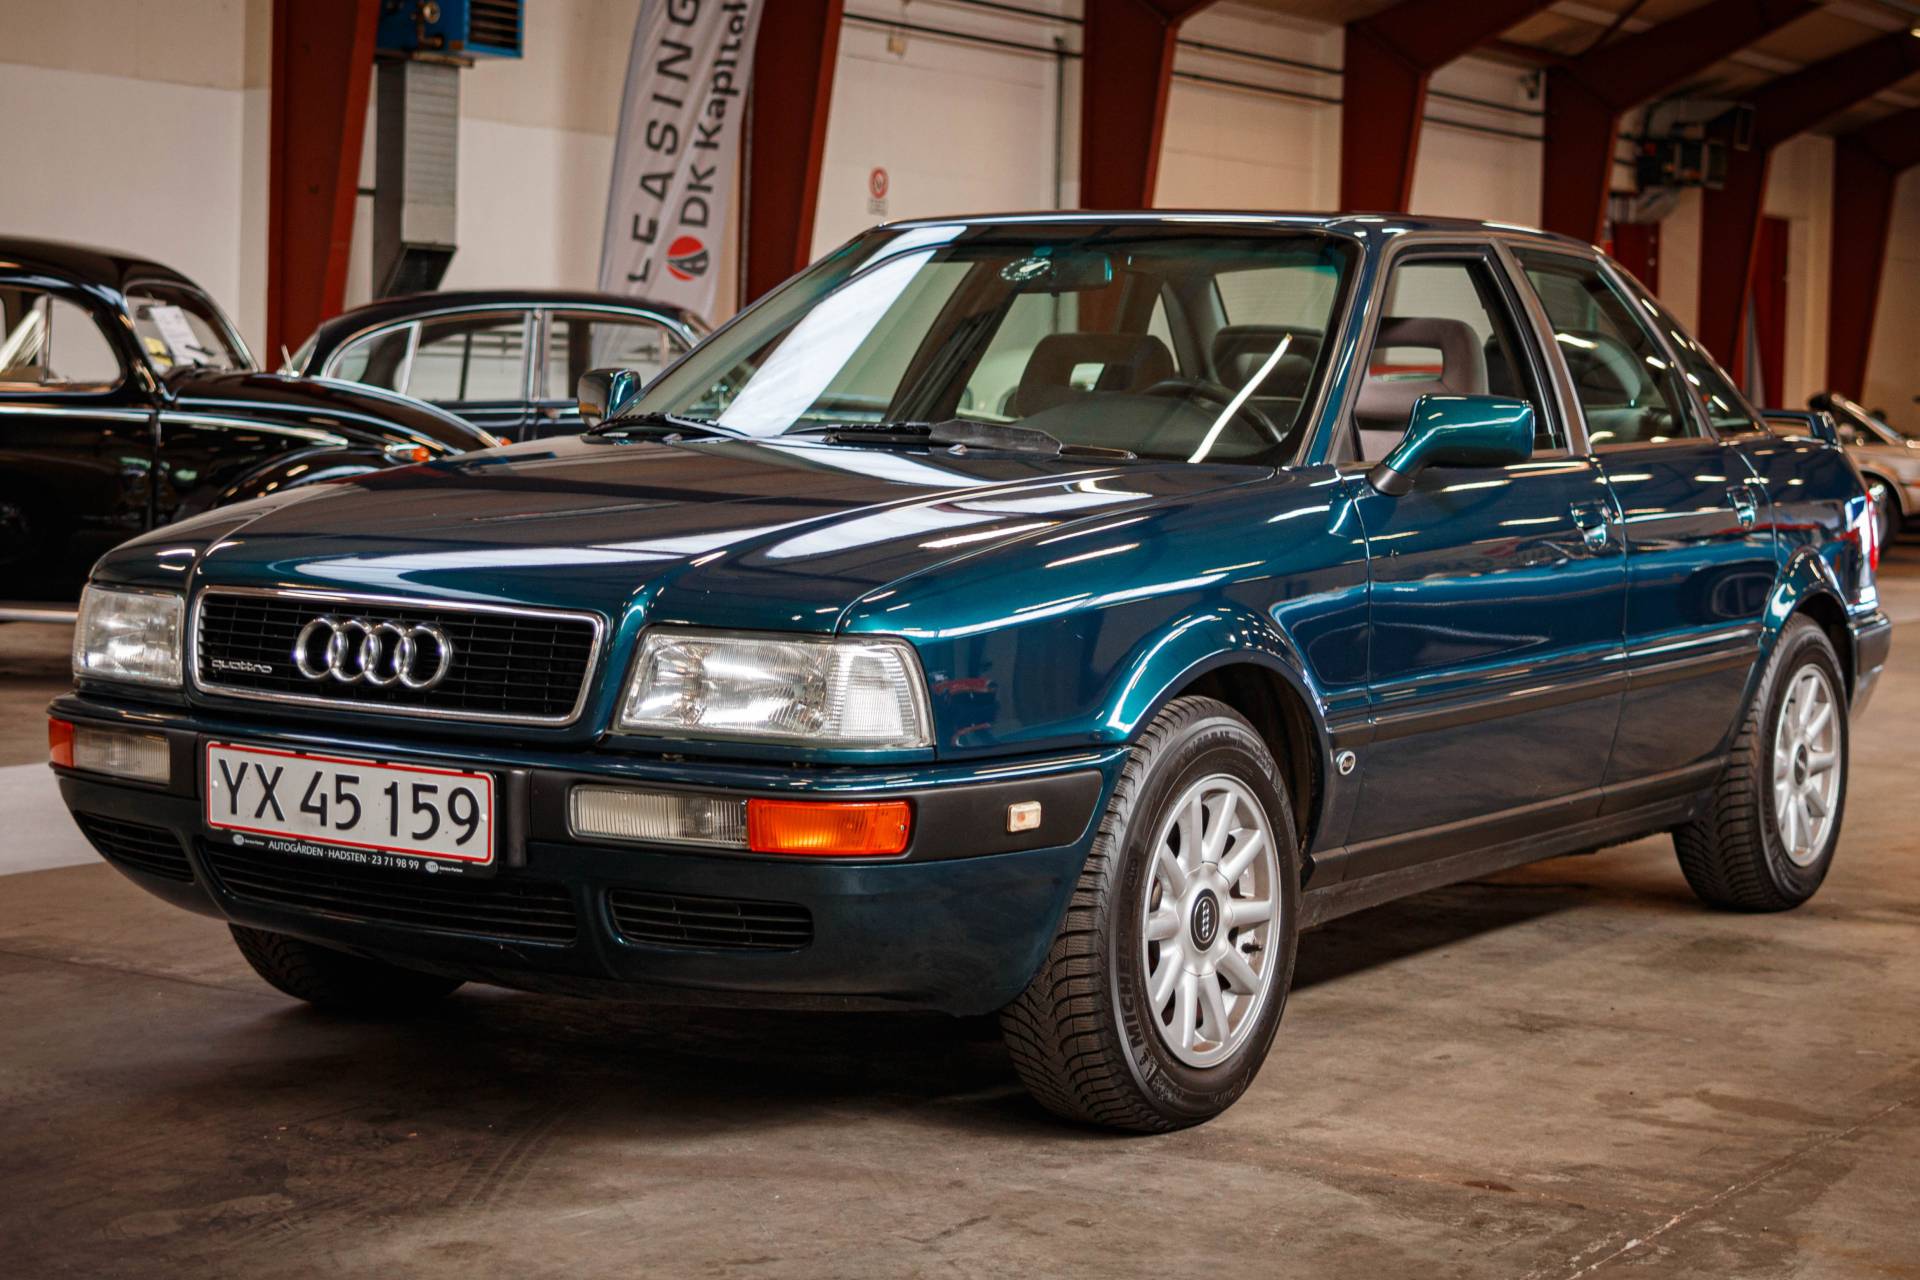 For Sale: Audi 80 - 2.6 E quattro (1993) offered for €18,000